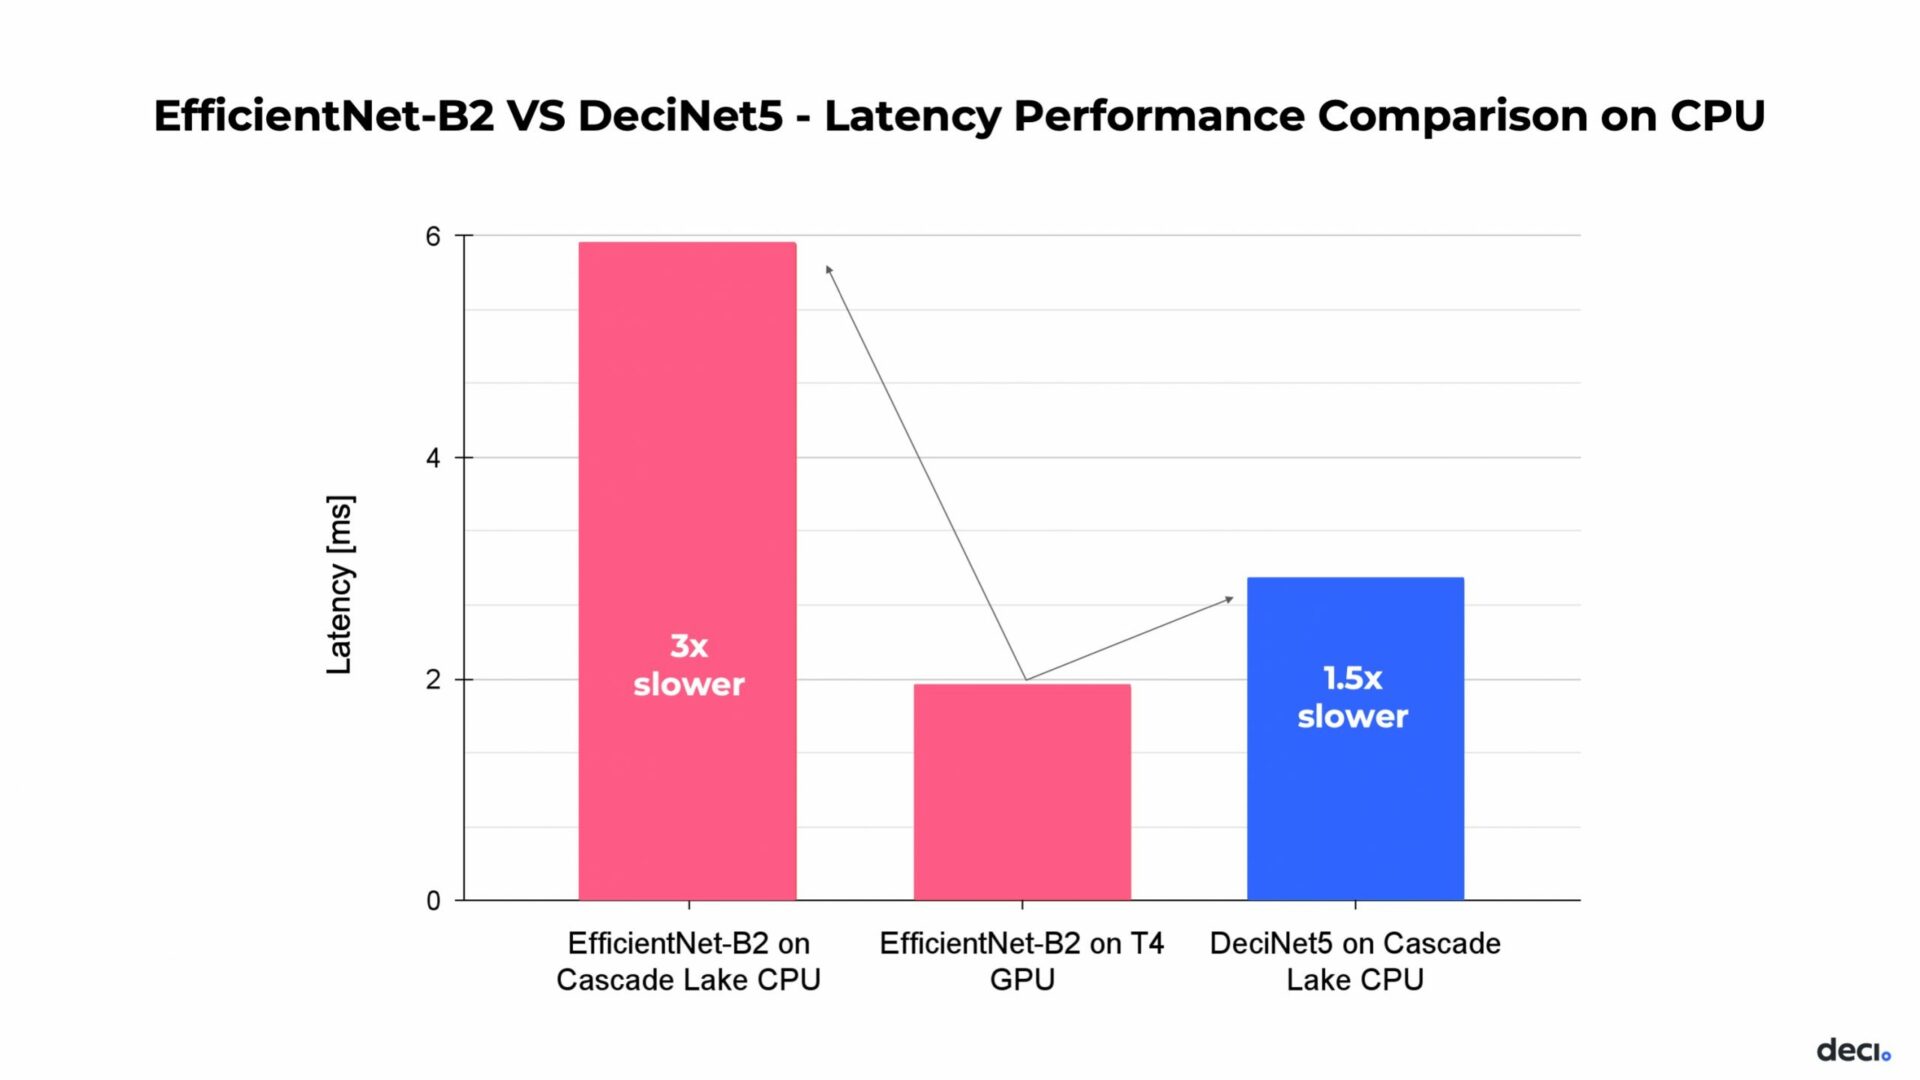 A graph showing EfficientNet-B2 vs DeciNets performance on CPU